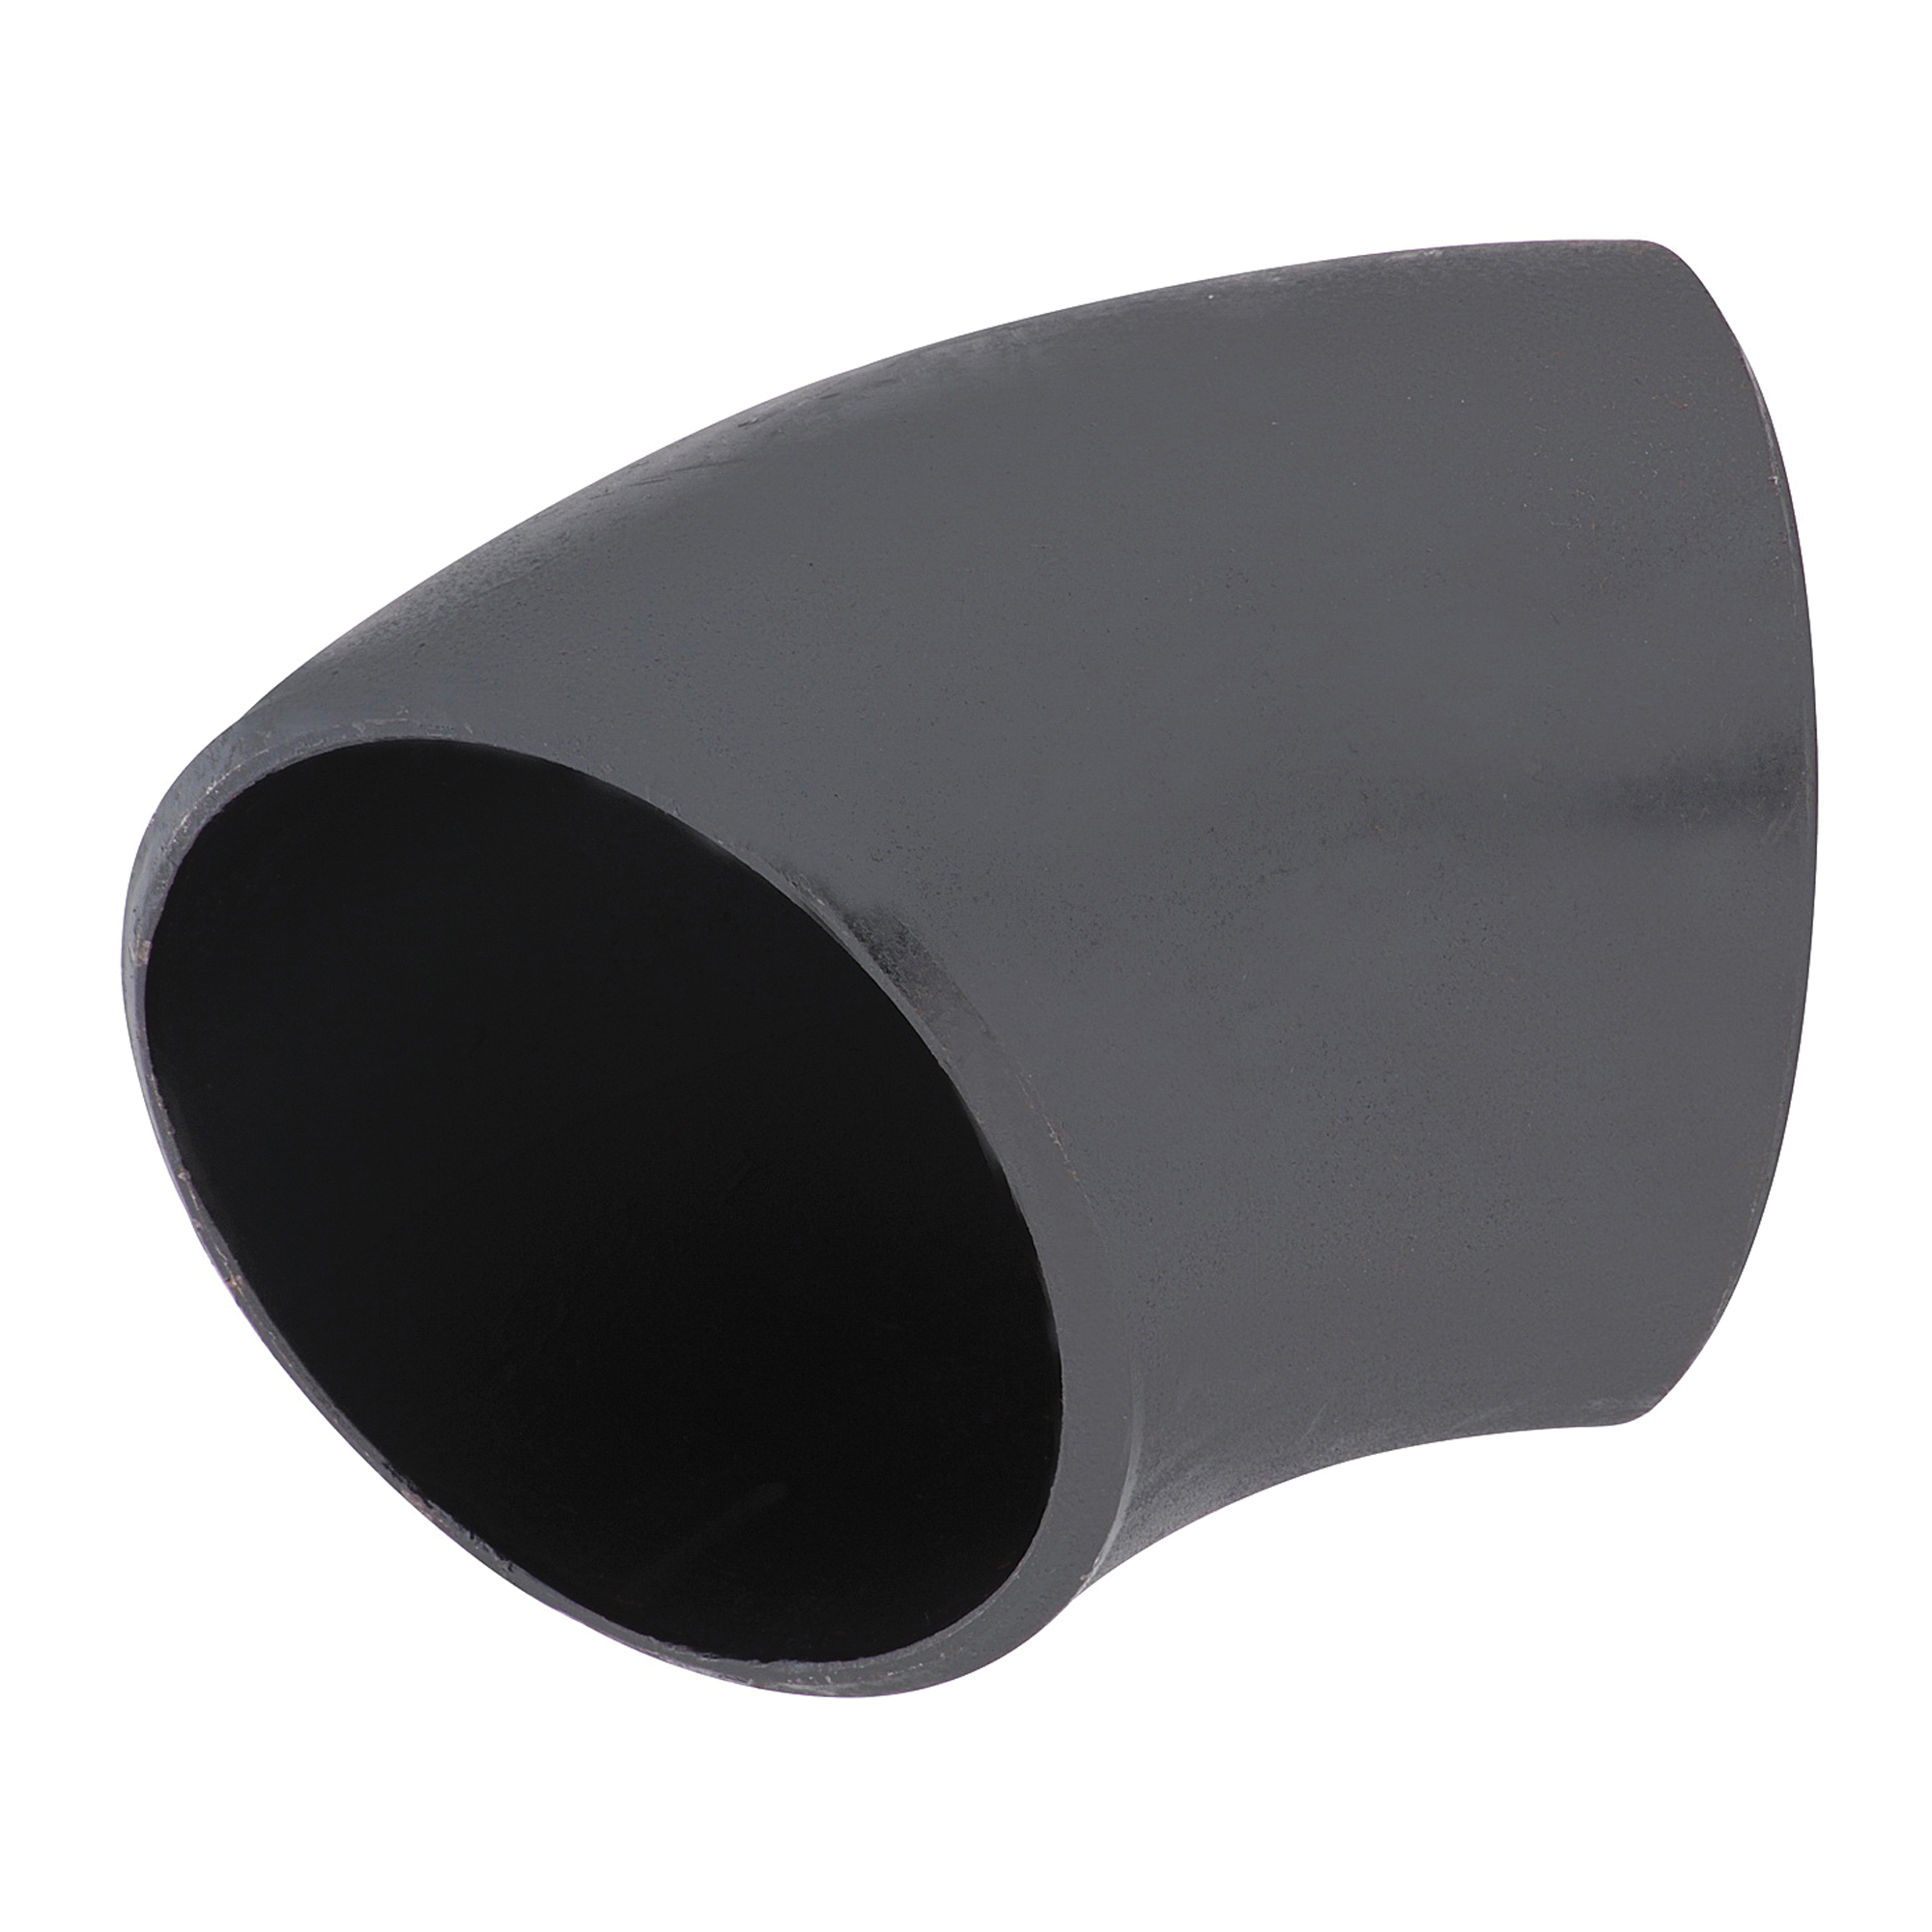 Matco-Norca™ MN4505 45 deg Pipe Elbow, 1 in, SCH 40/STD - Carbon Steel Pipe Fittings